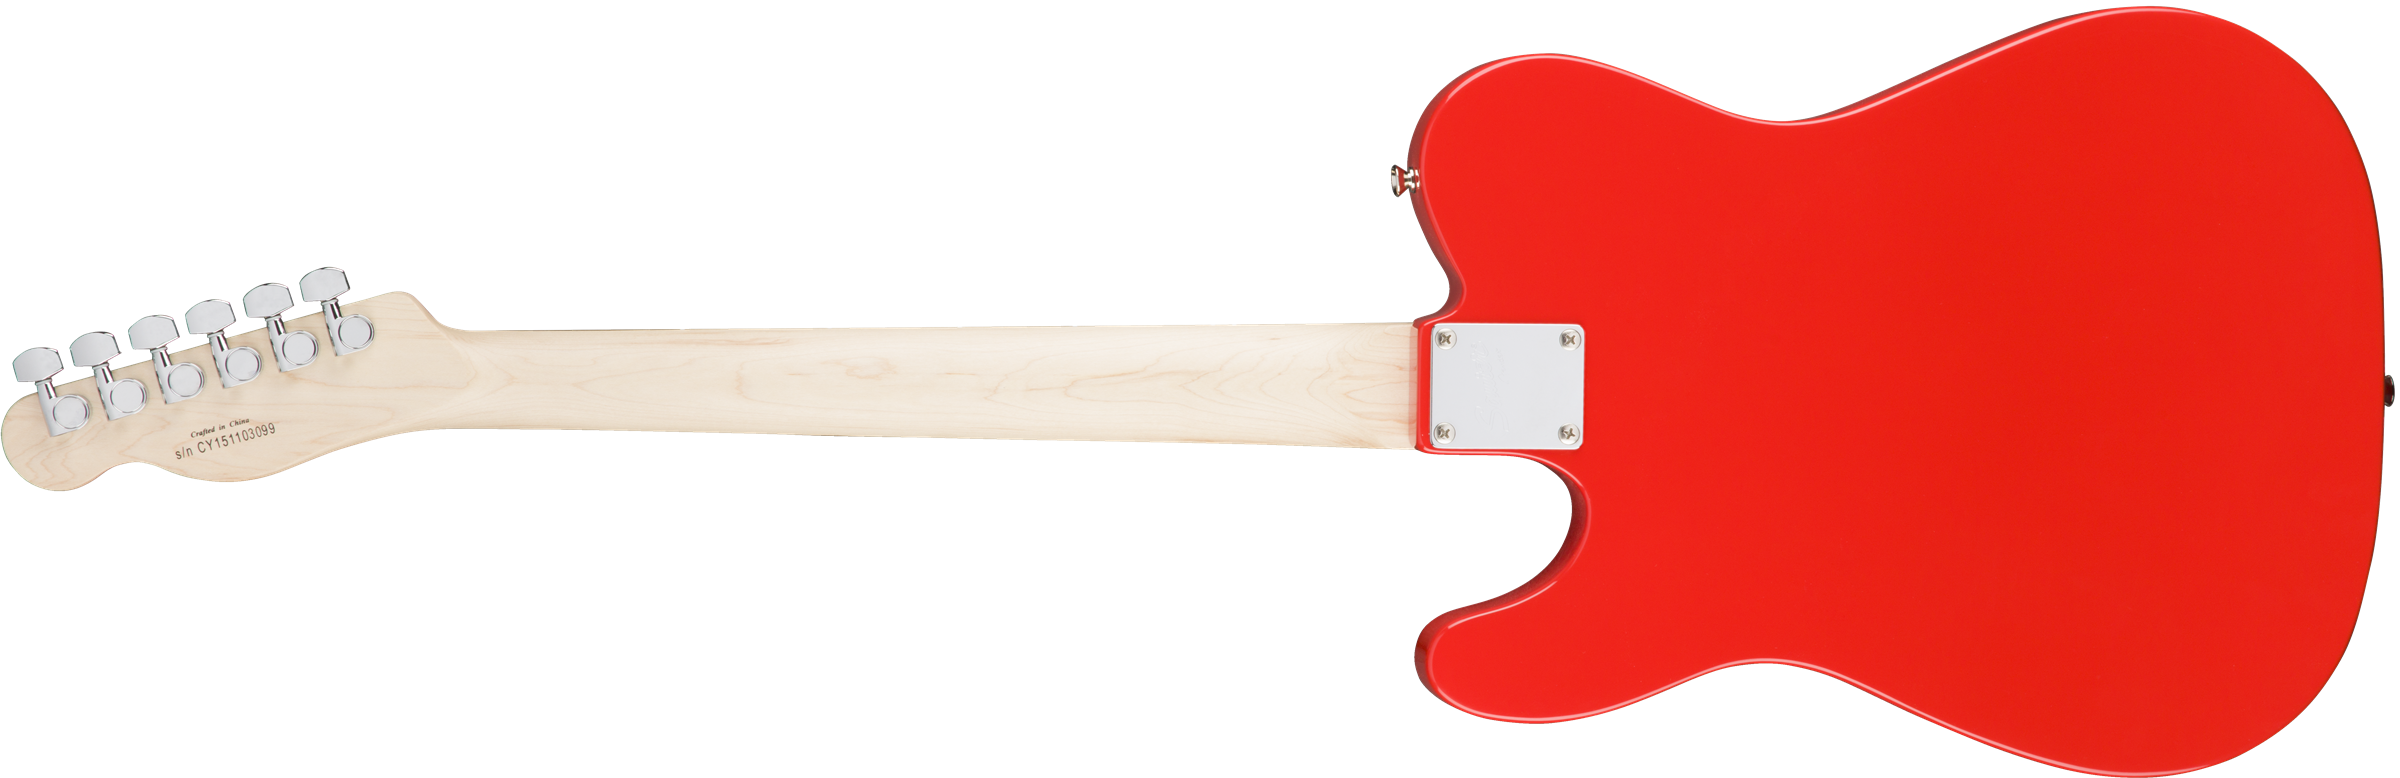 Squier Tele Affinity Series 2019 Lau - Race Red - Tel shape electric guitar - Variation 5